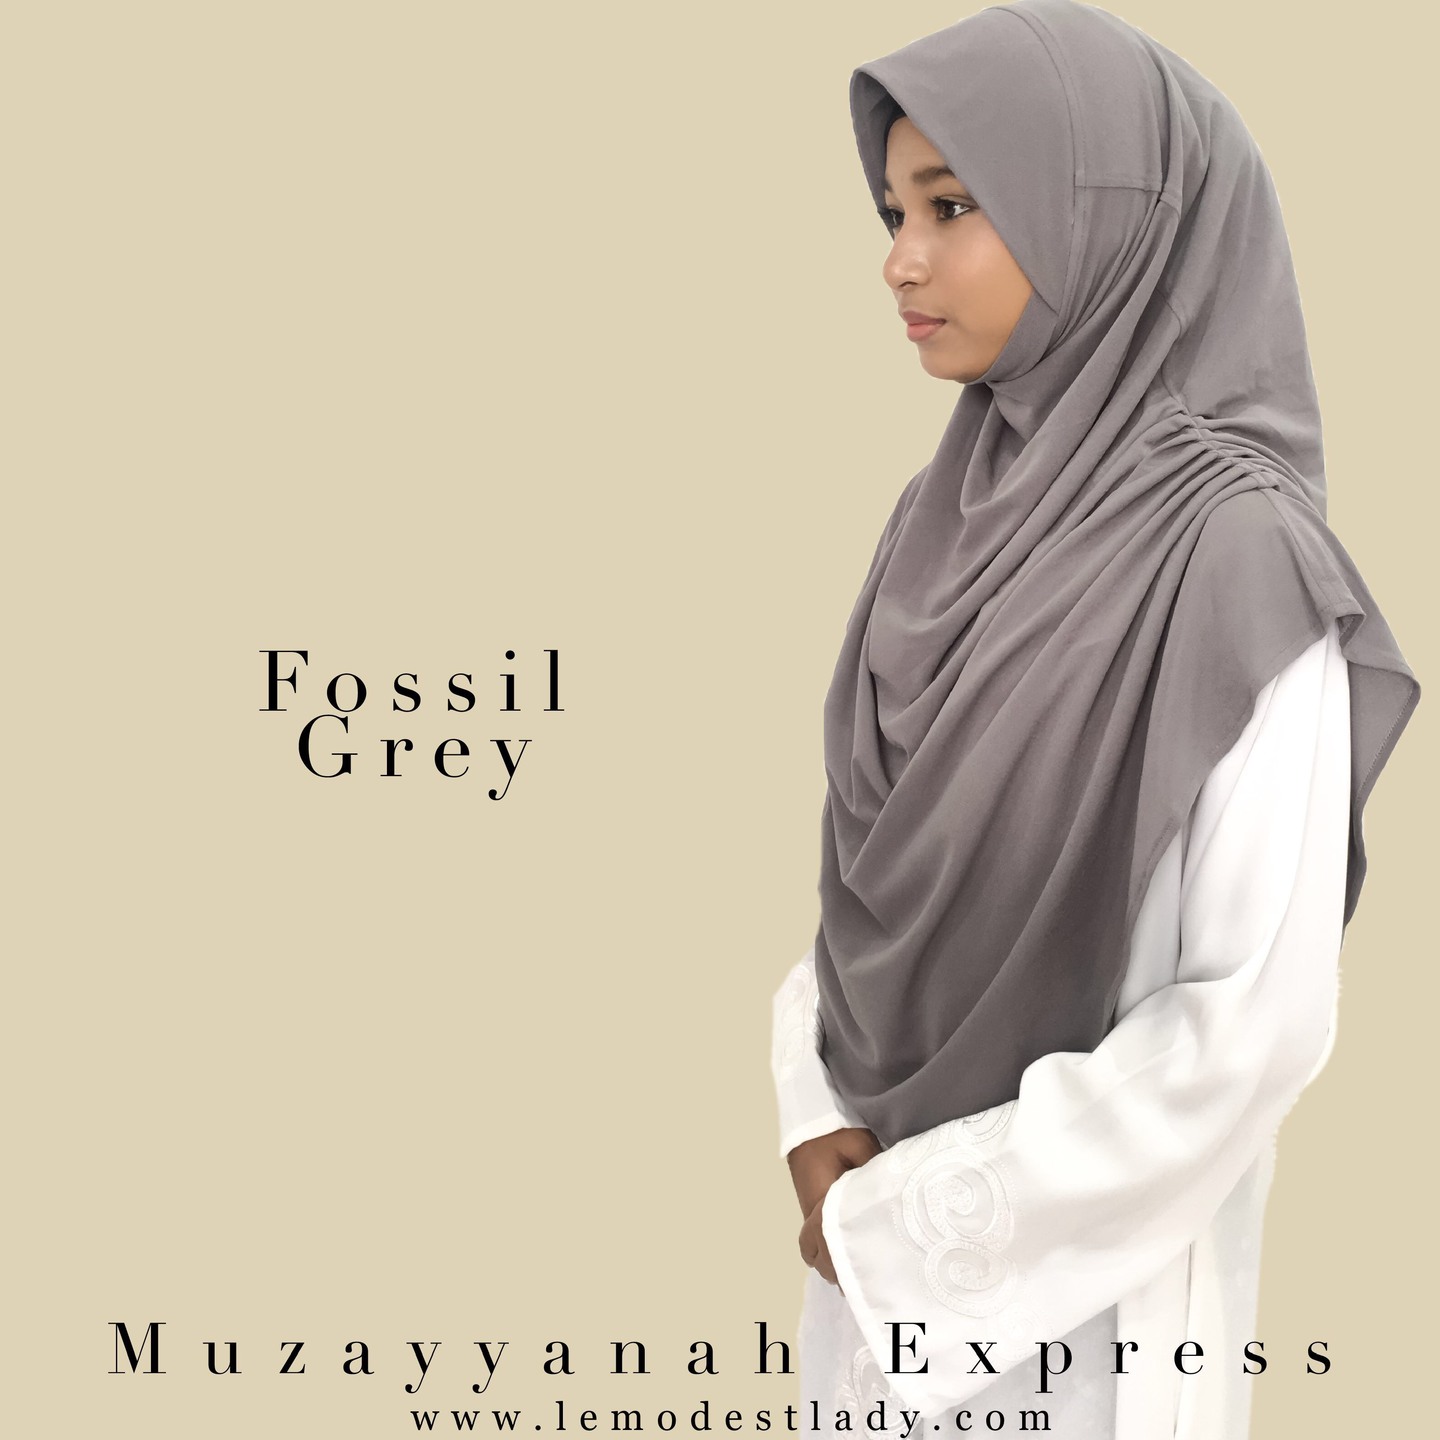 Muzayyanah Express - Fossil Grey